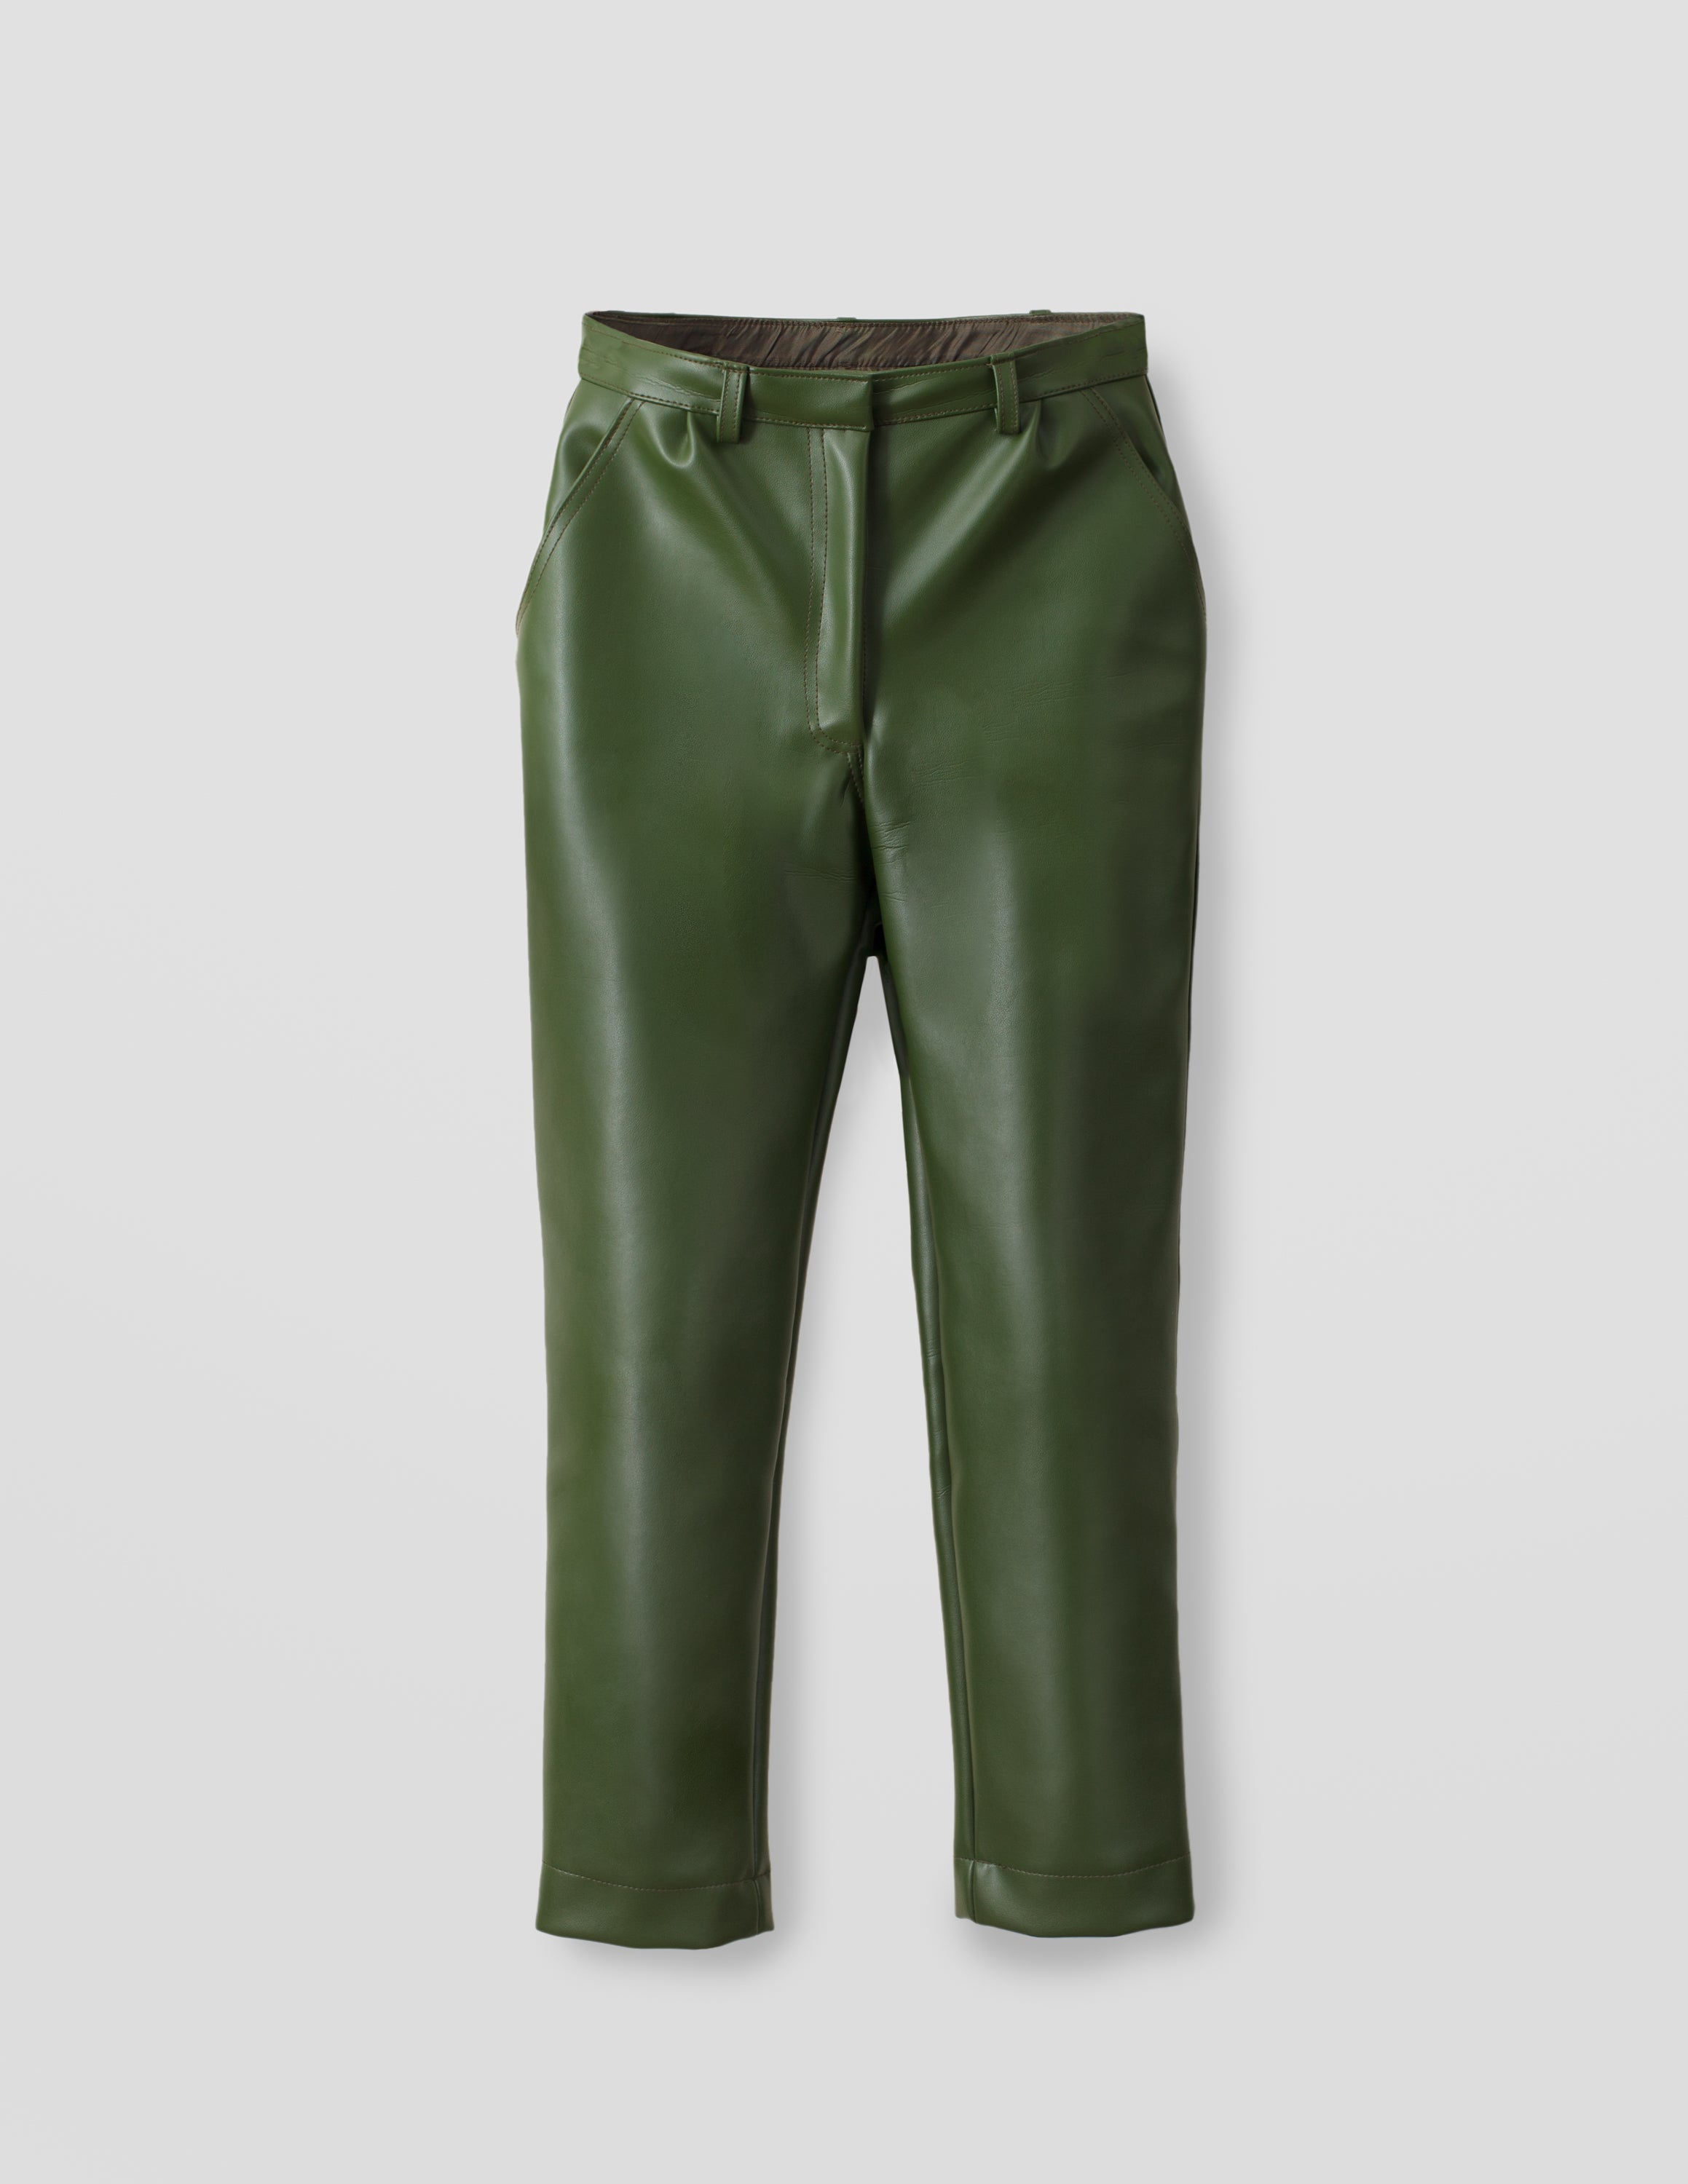 CHOZA pants - Cactus leather